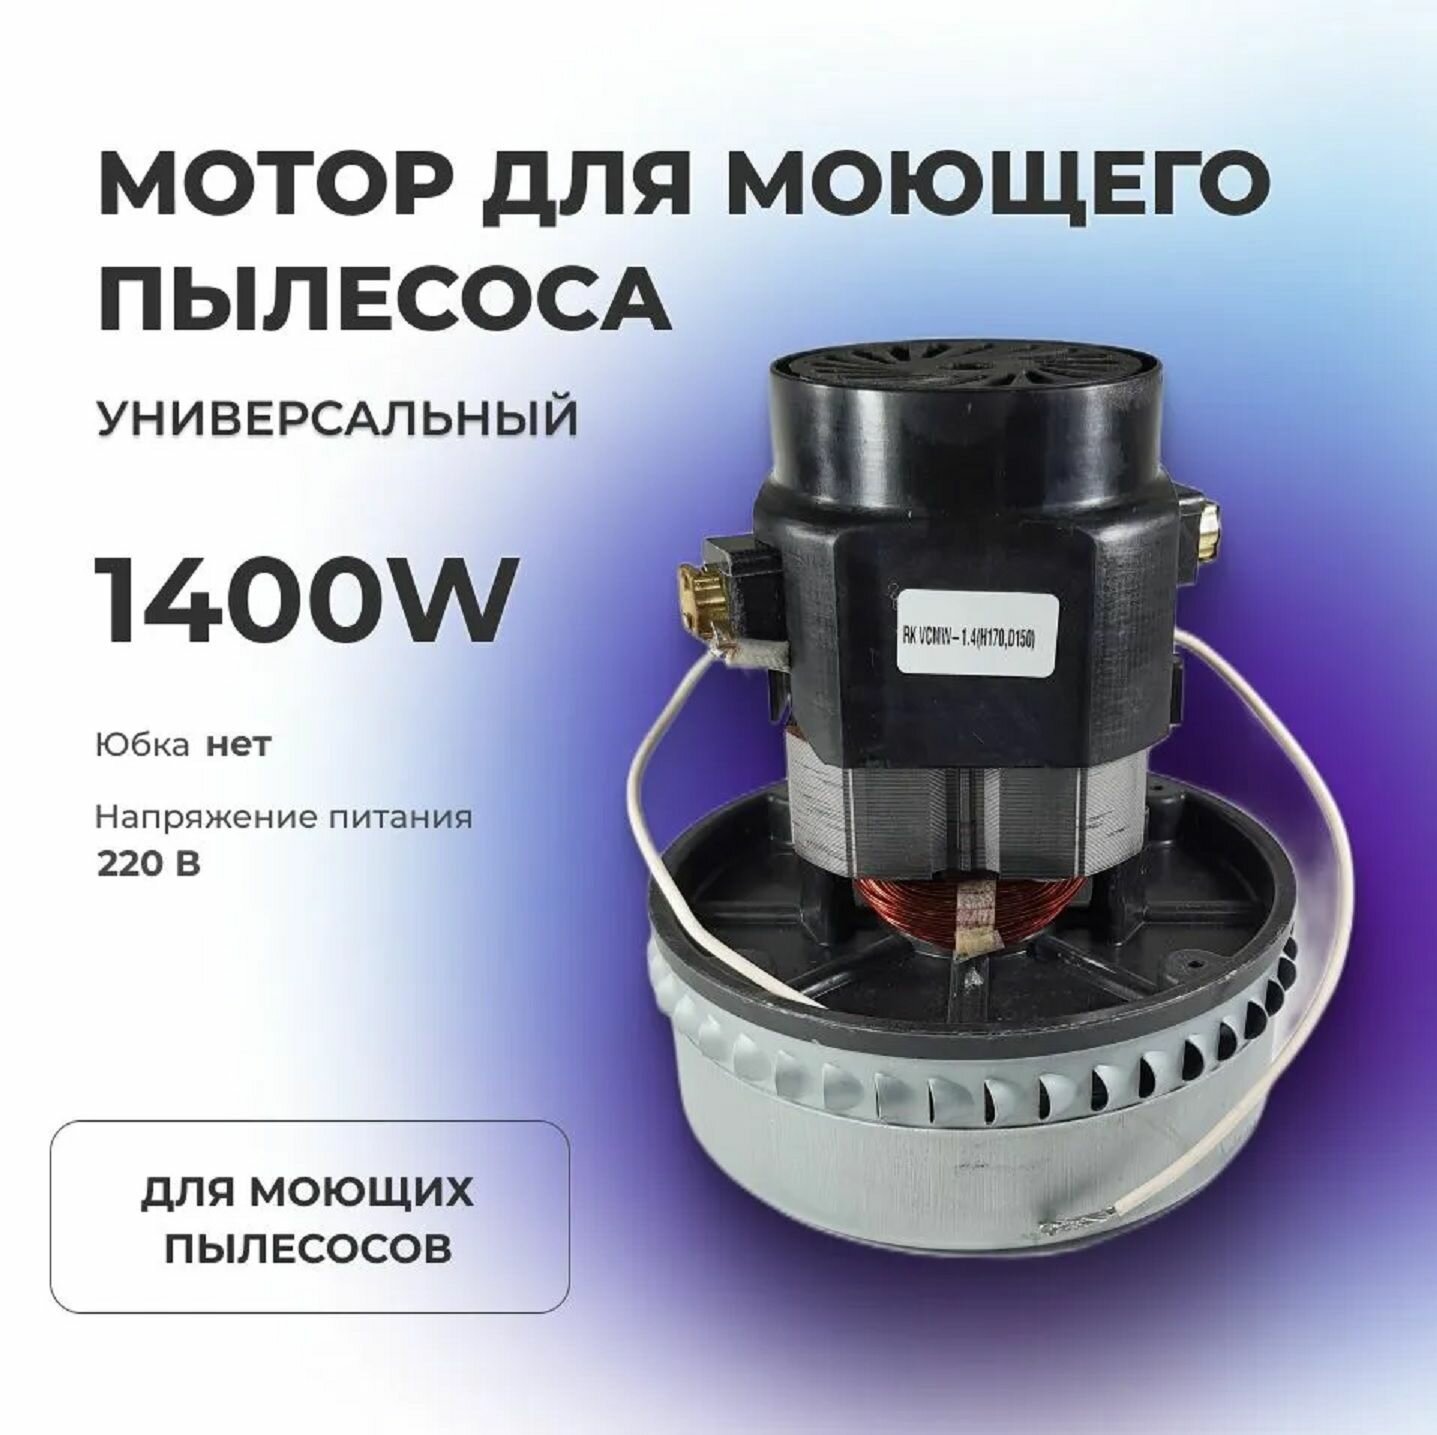 Электродвигатель на пылесос 1400W (моющий) YDC-09 H170h58144